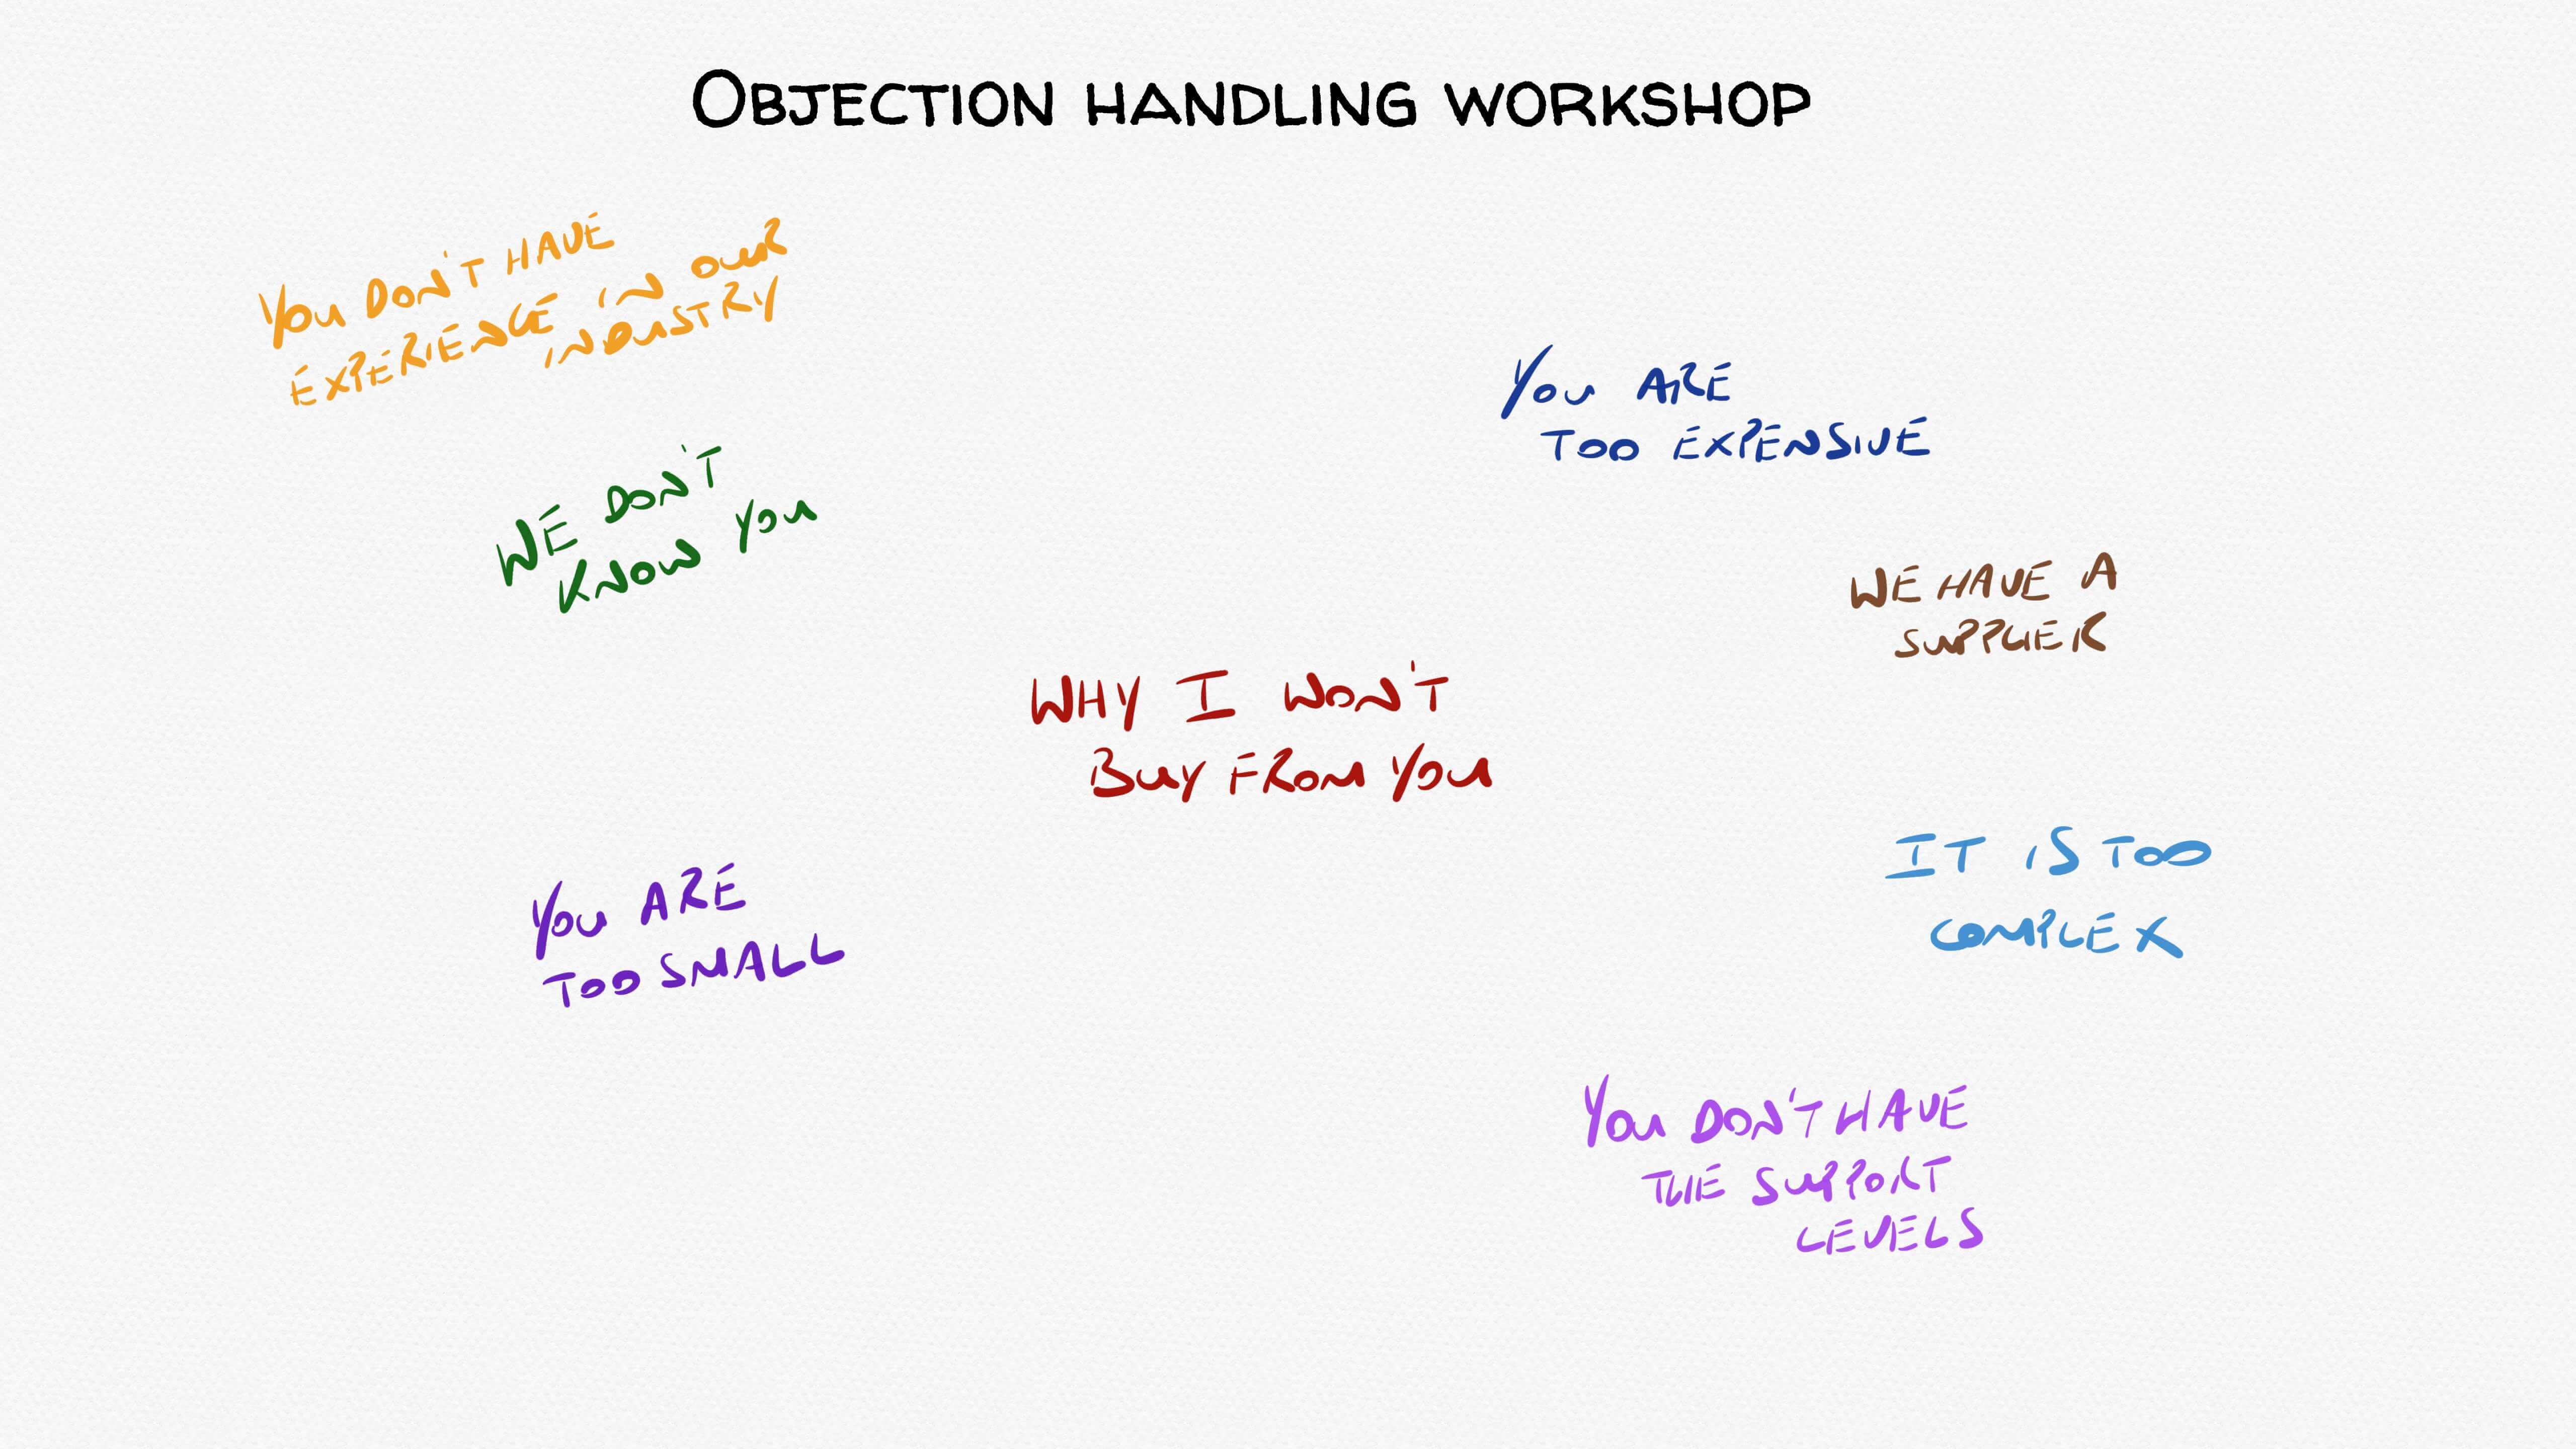 Objection-handling-workshop-whiteboard-image